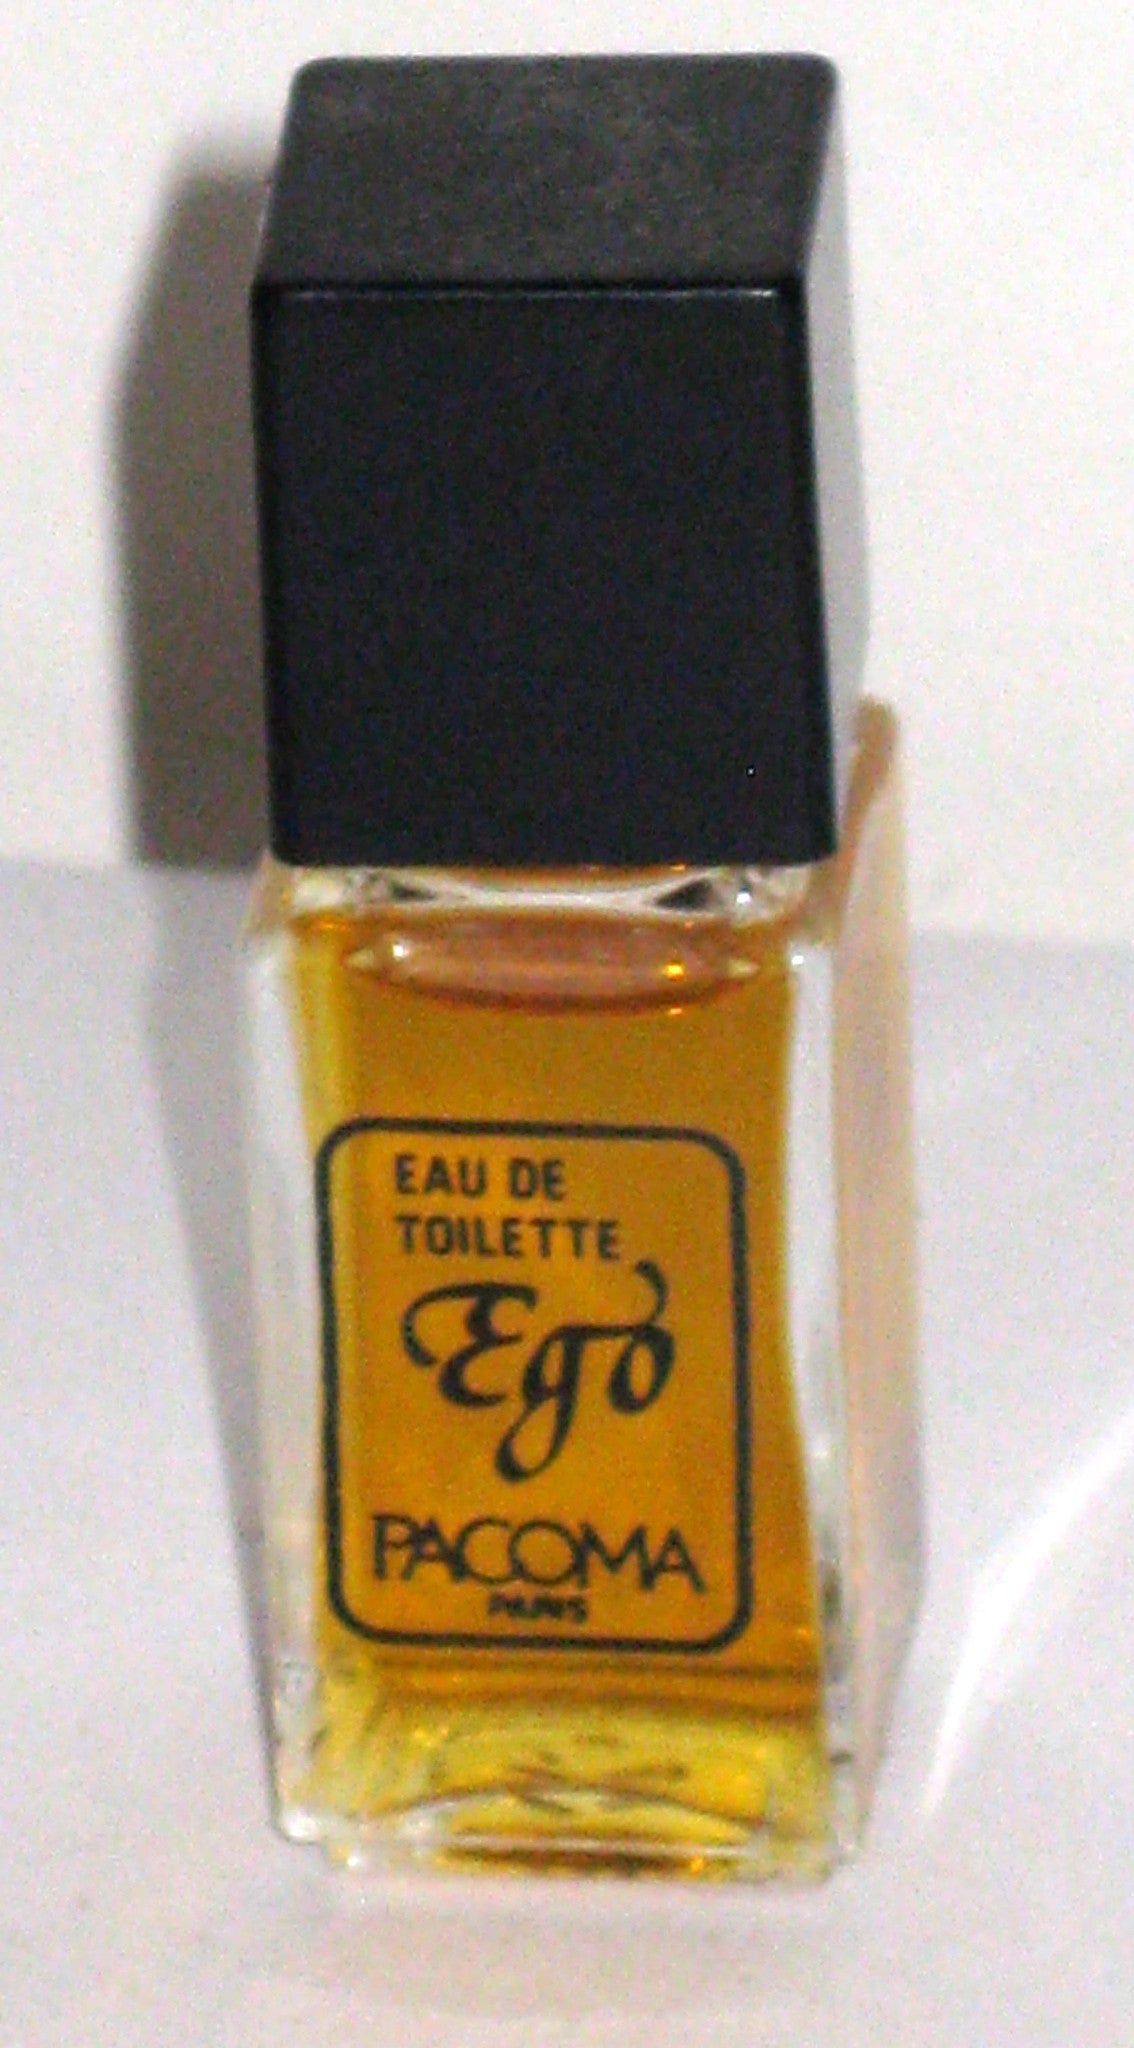 Pacoma Ego Eau De Toilette Mini